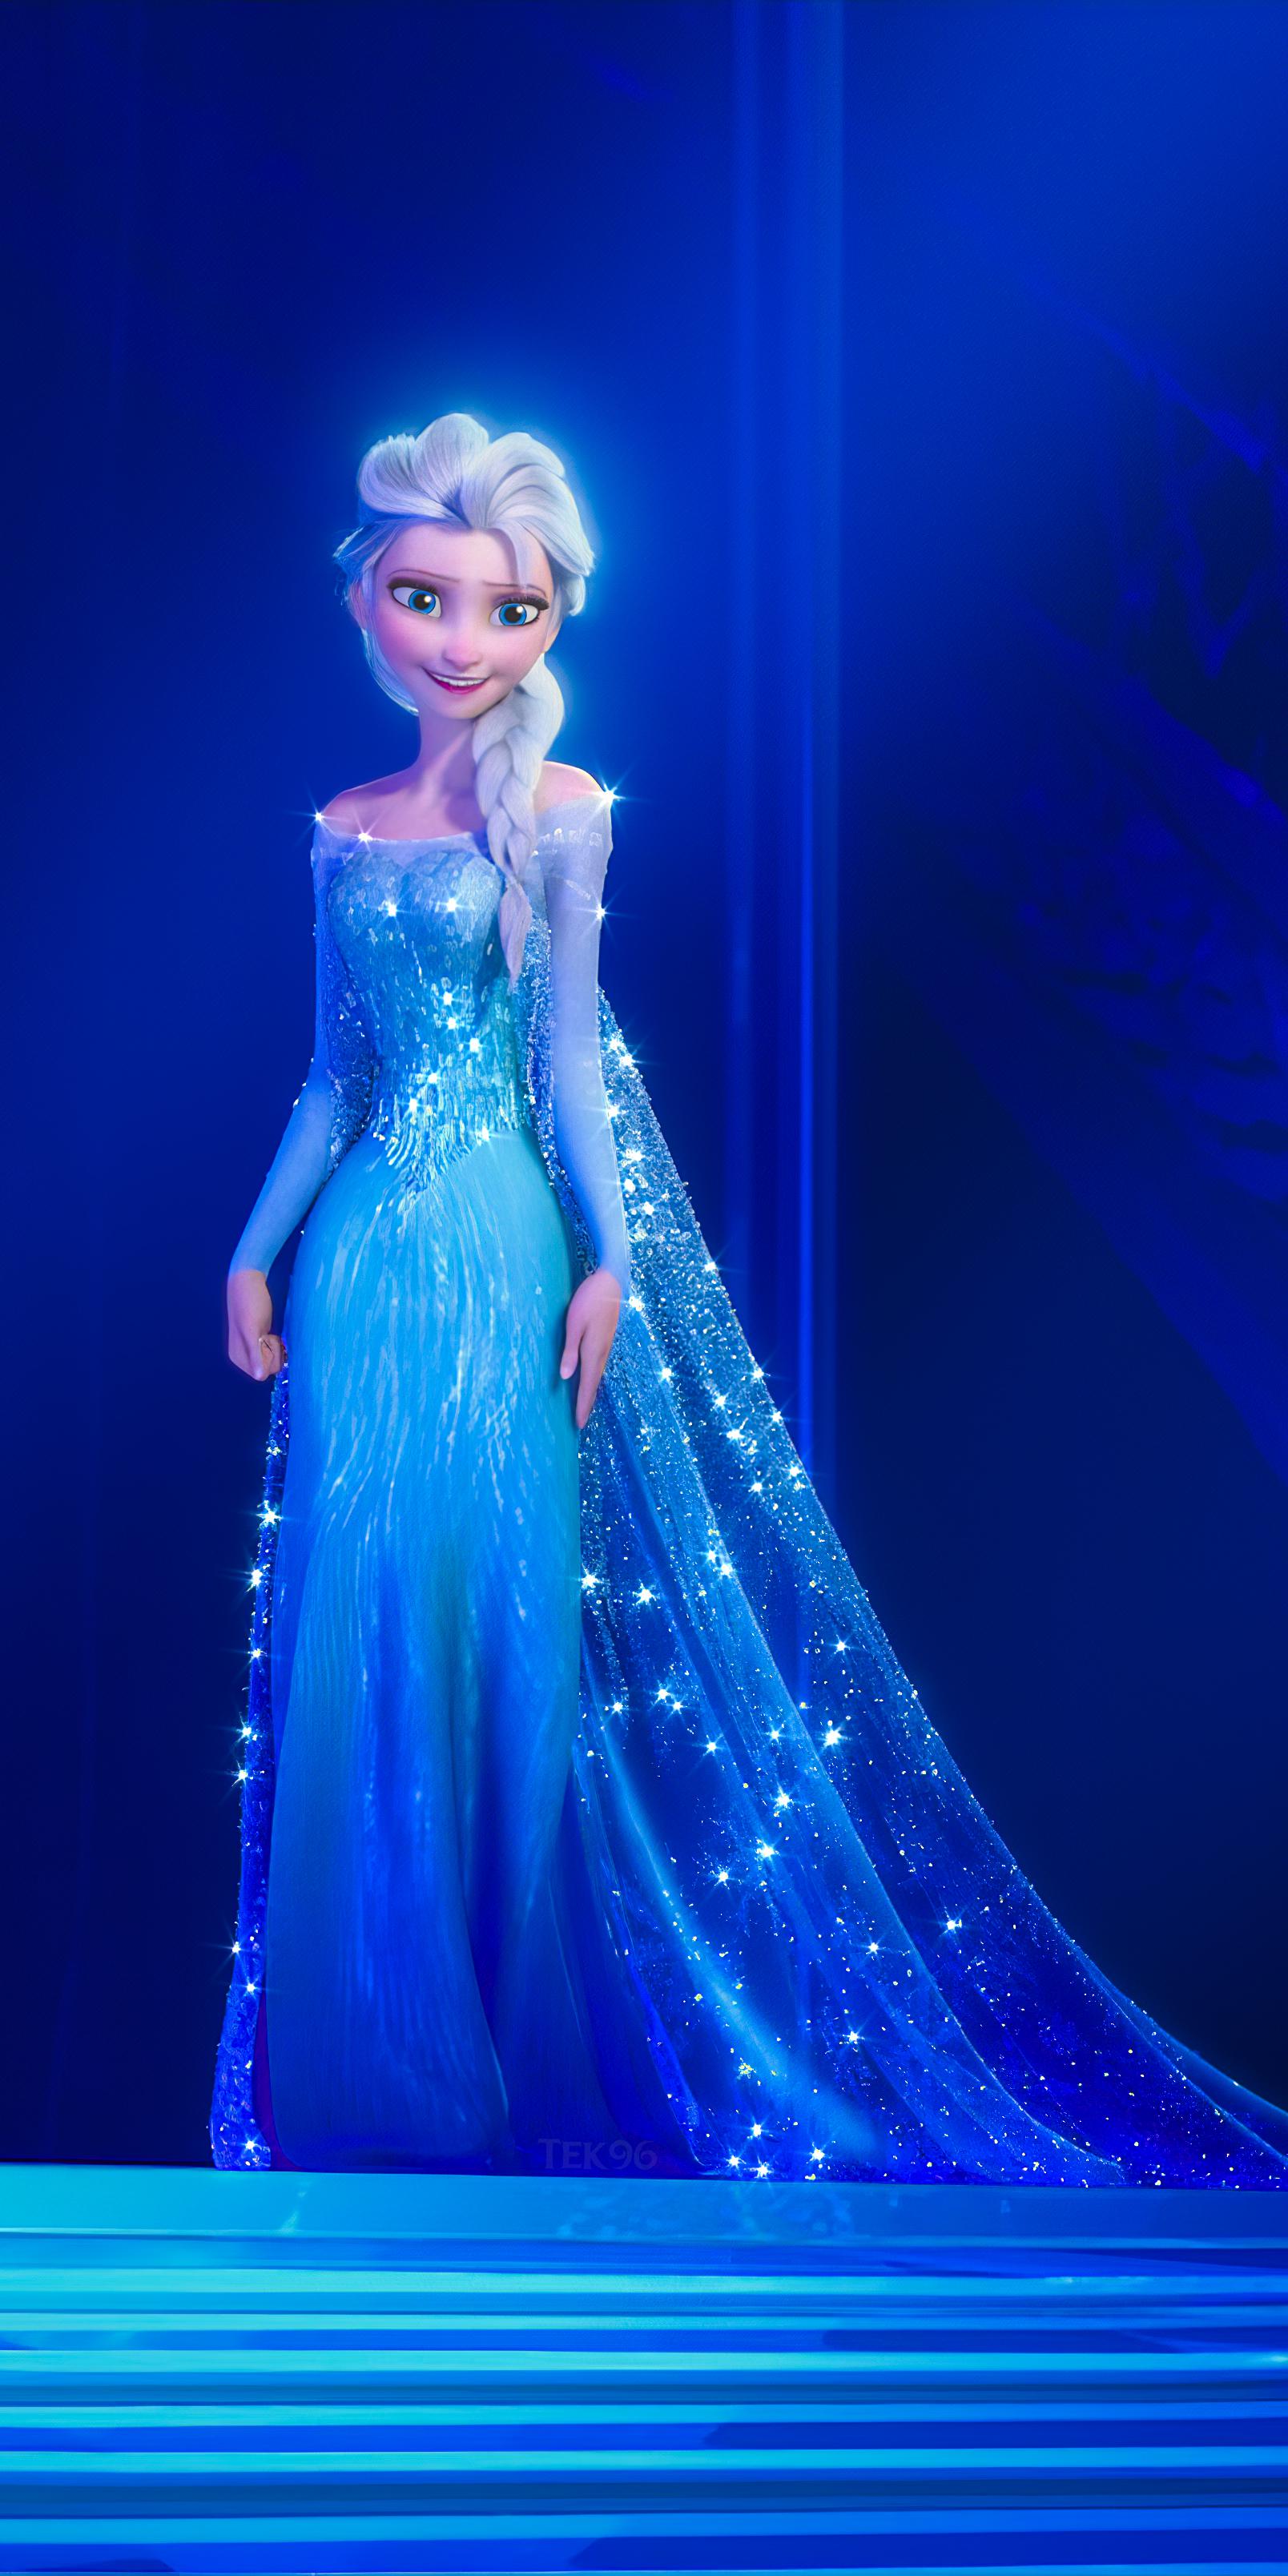 A cartoon character in blue dress and tiara - Elsa